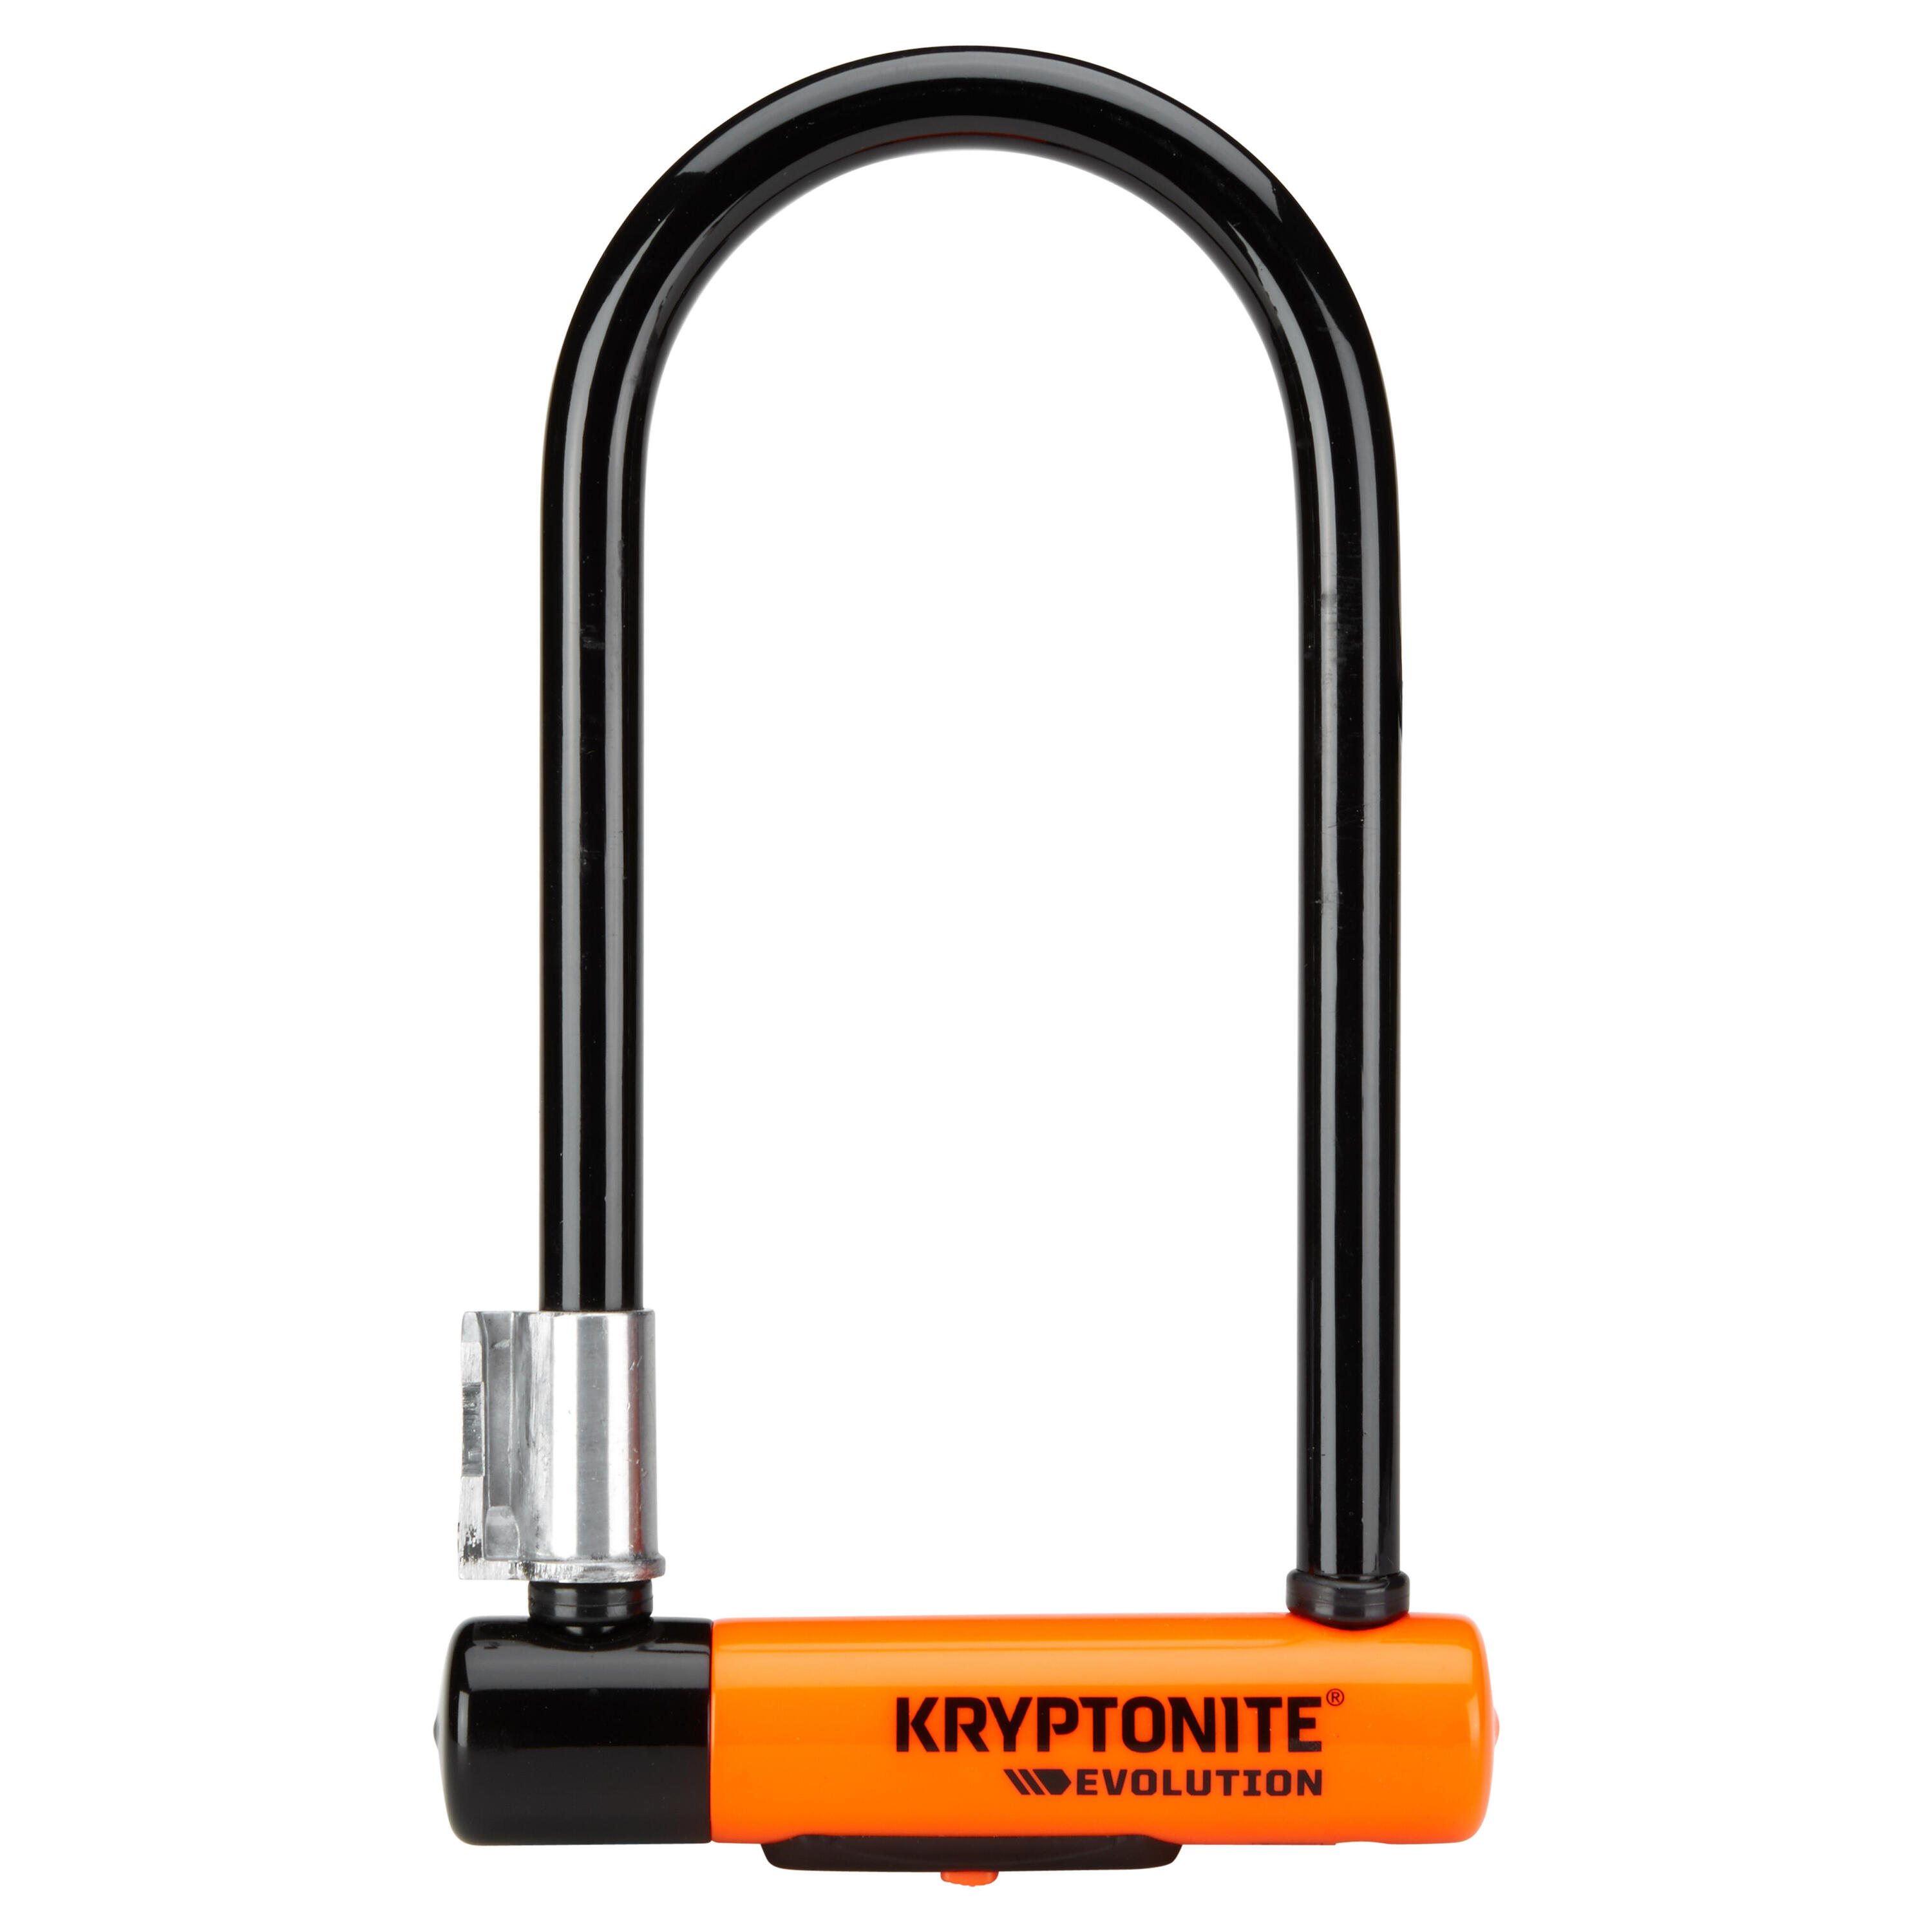 KRYPTONITE Kryptonite Evolution Standard U-Lock with Flexframe bracket